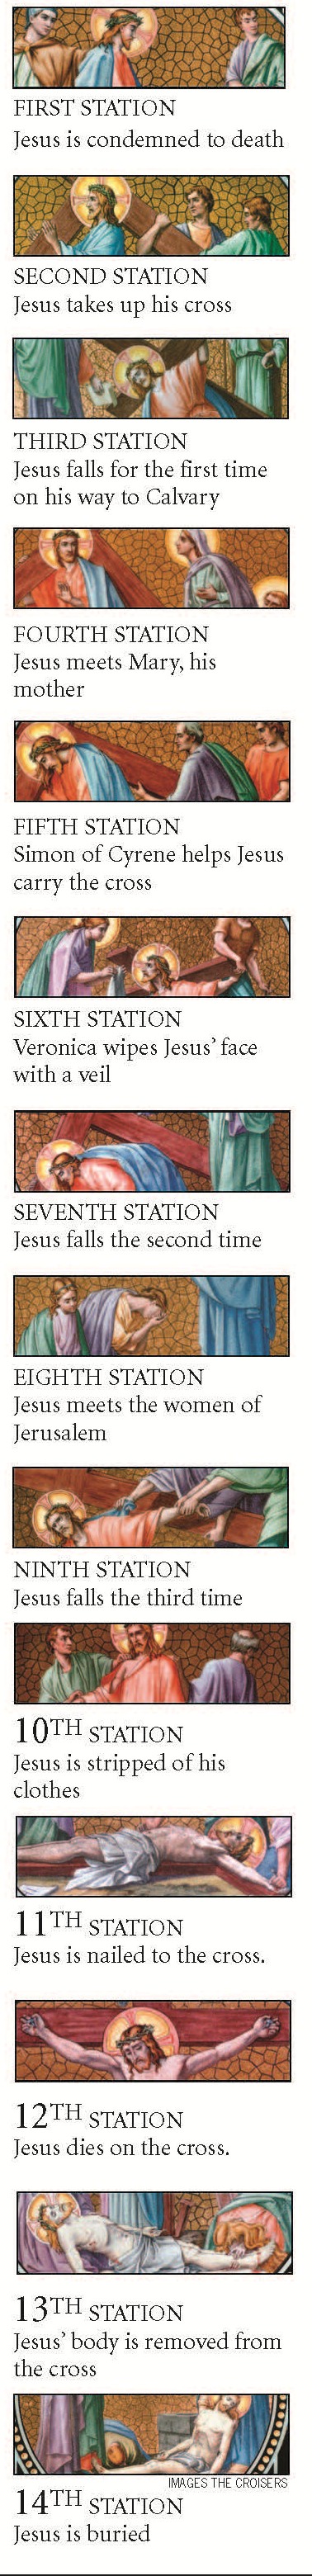 station of the cross prayer guide pdf